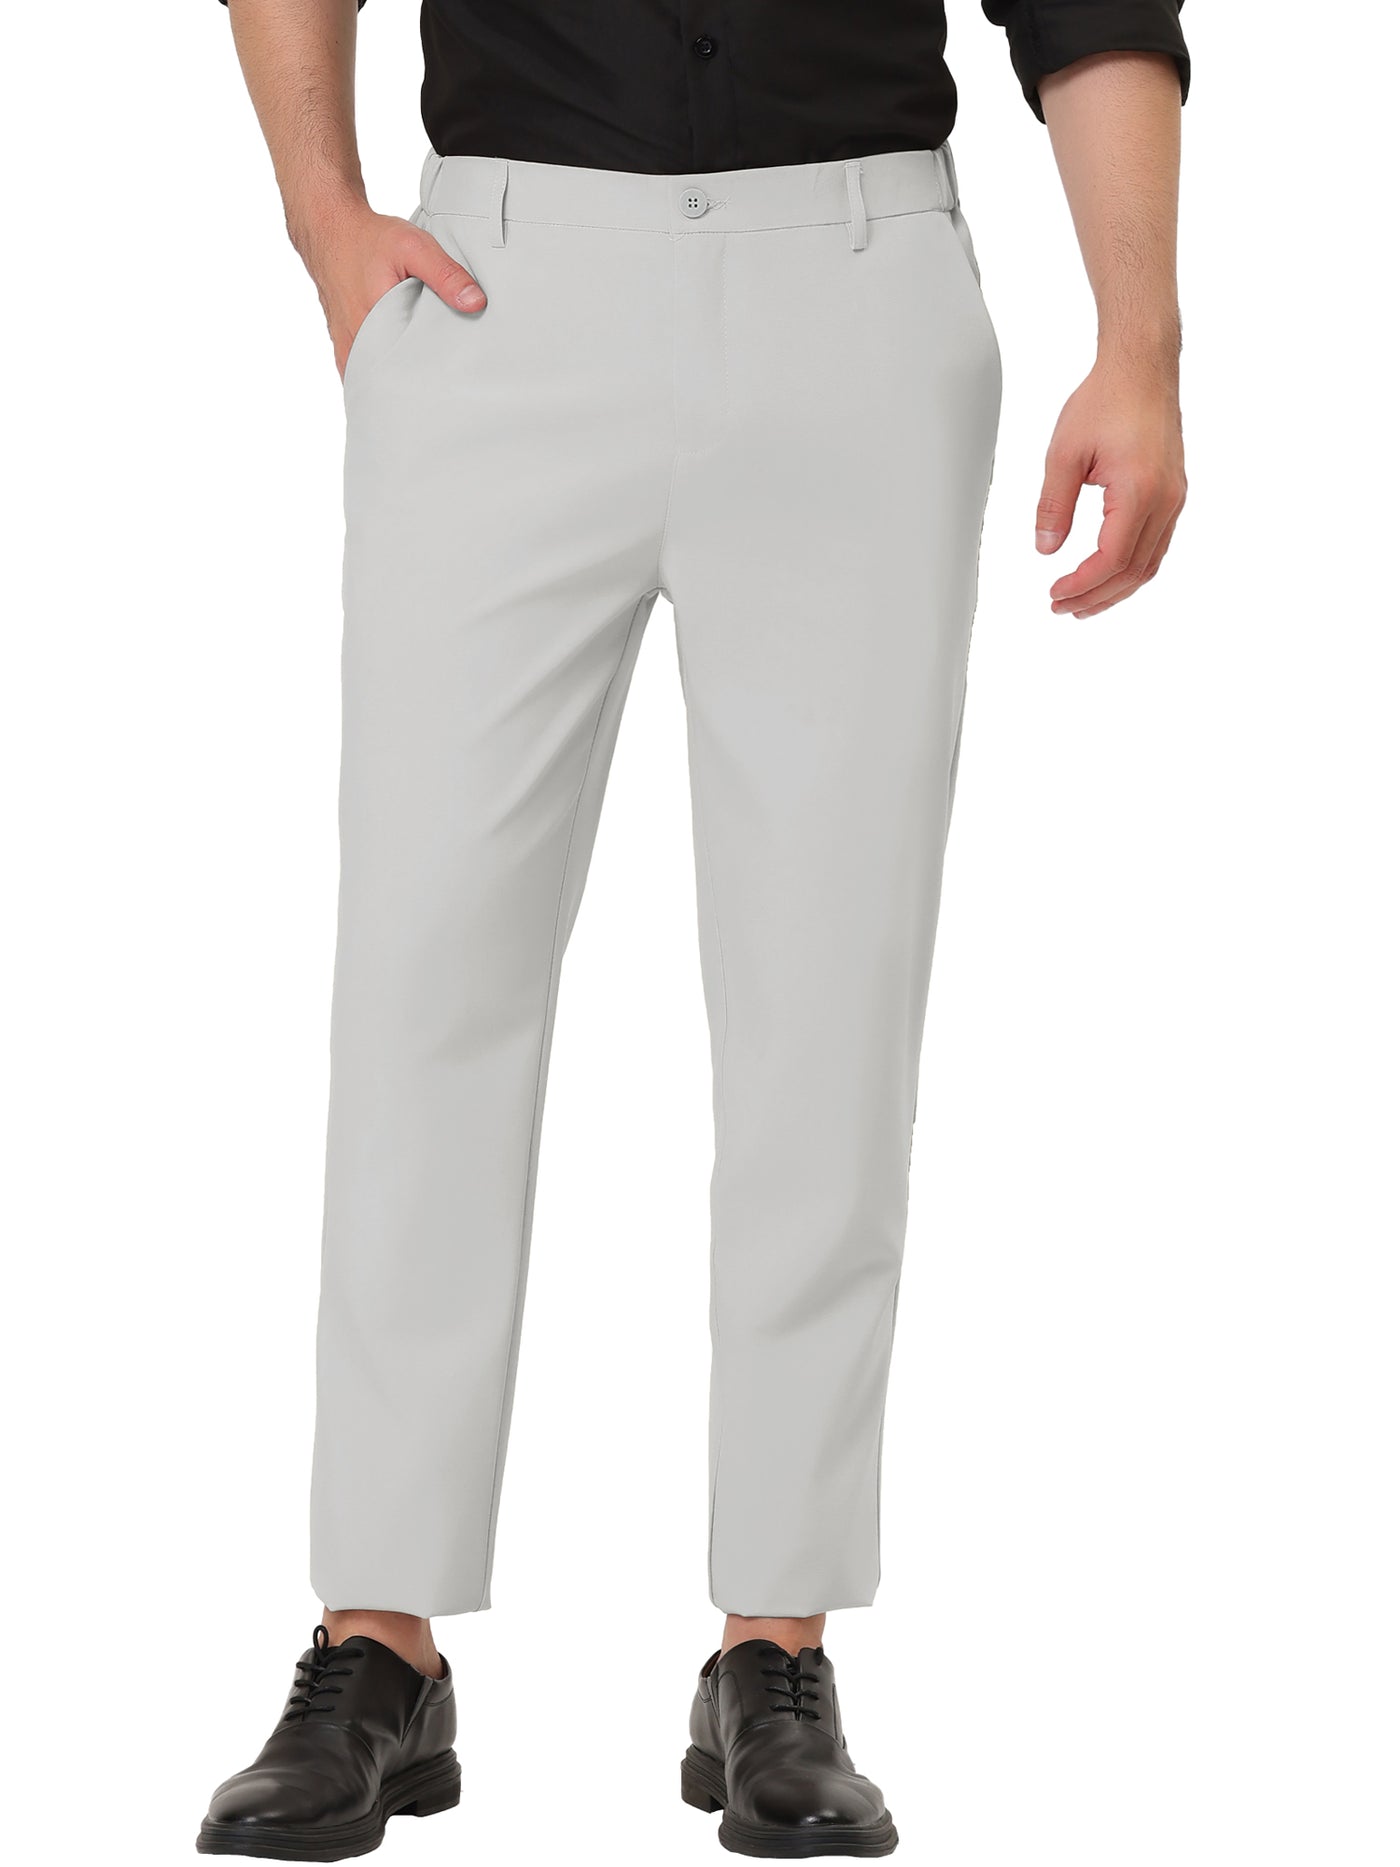 Bublédon Solid Color Flat Front Business Formal Dress Pants